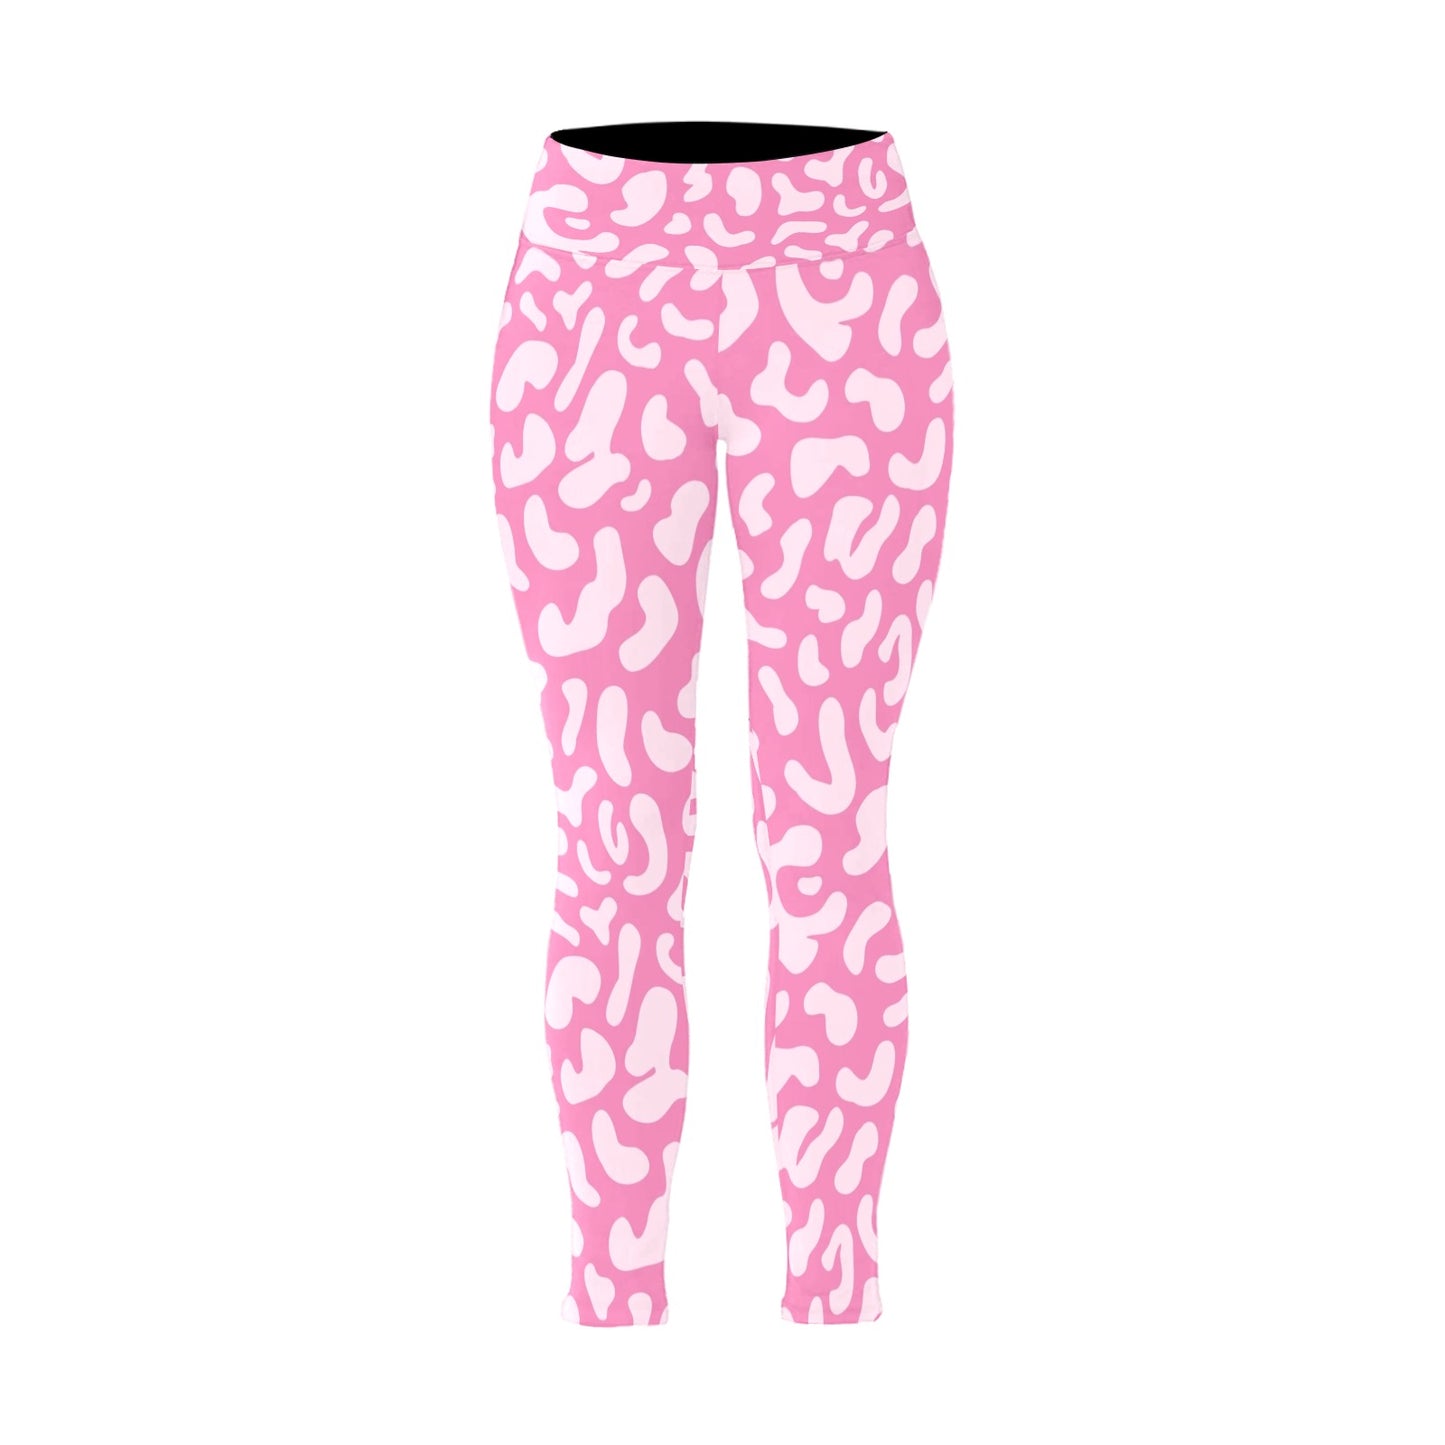 Pink Leopard - Women's Plus Size High Waist Leggings Women's Plus Size High Waist Leggings animal